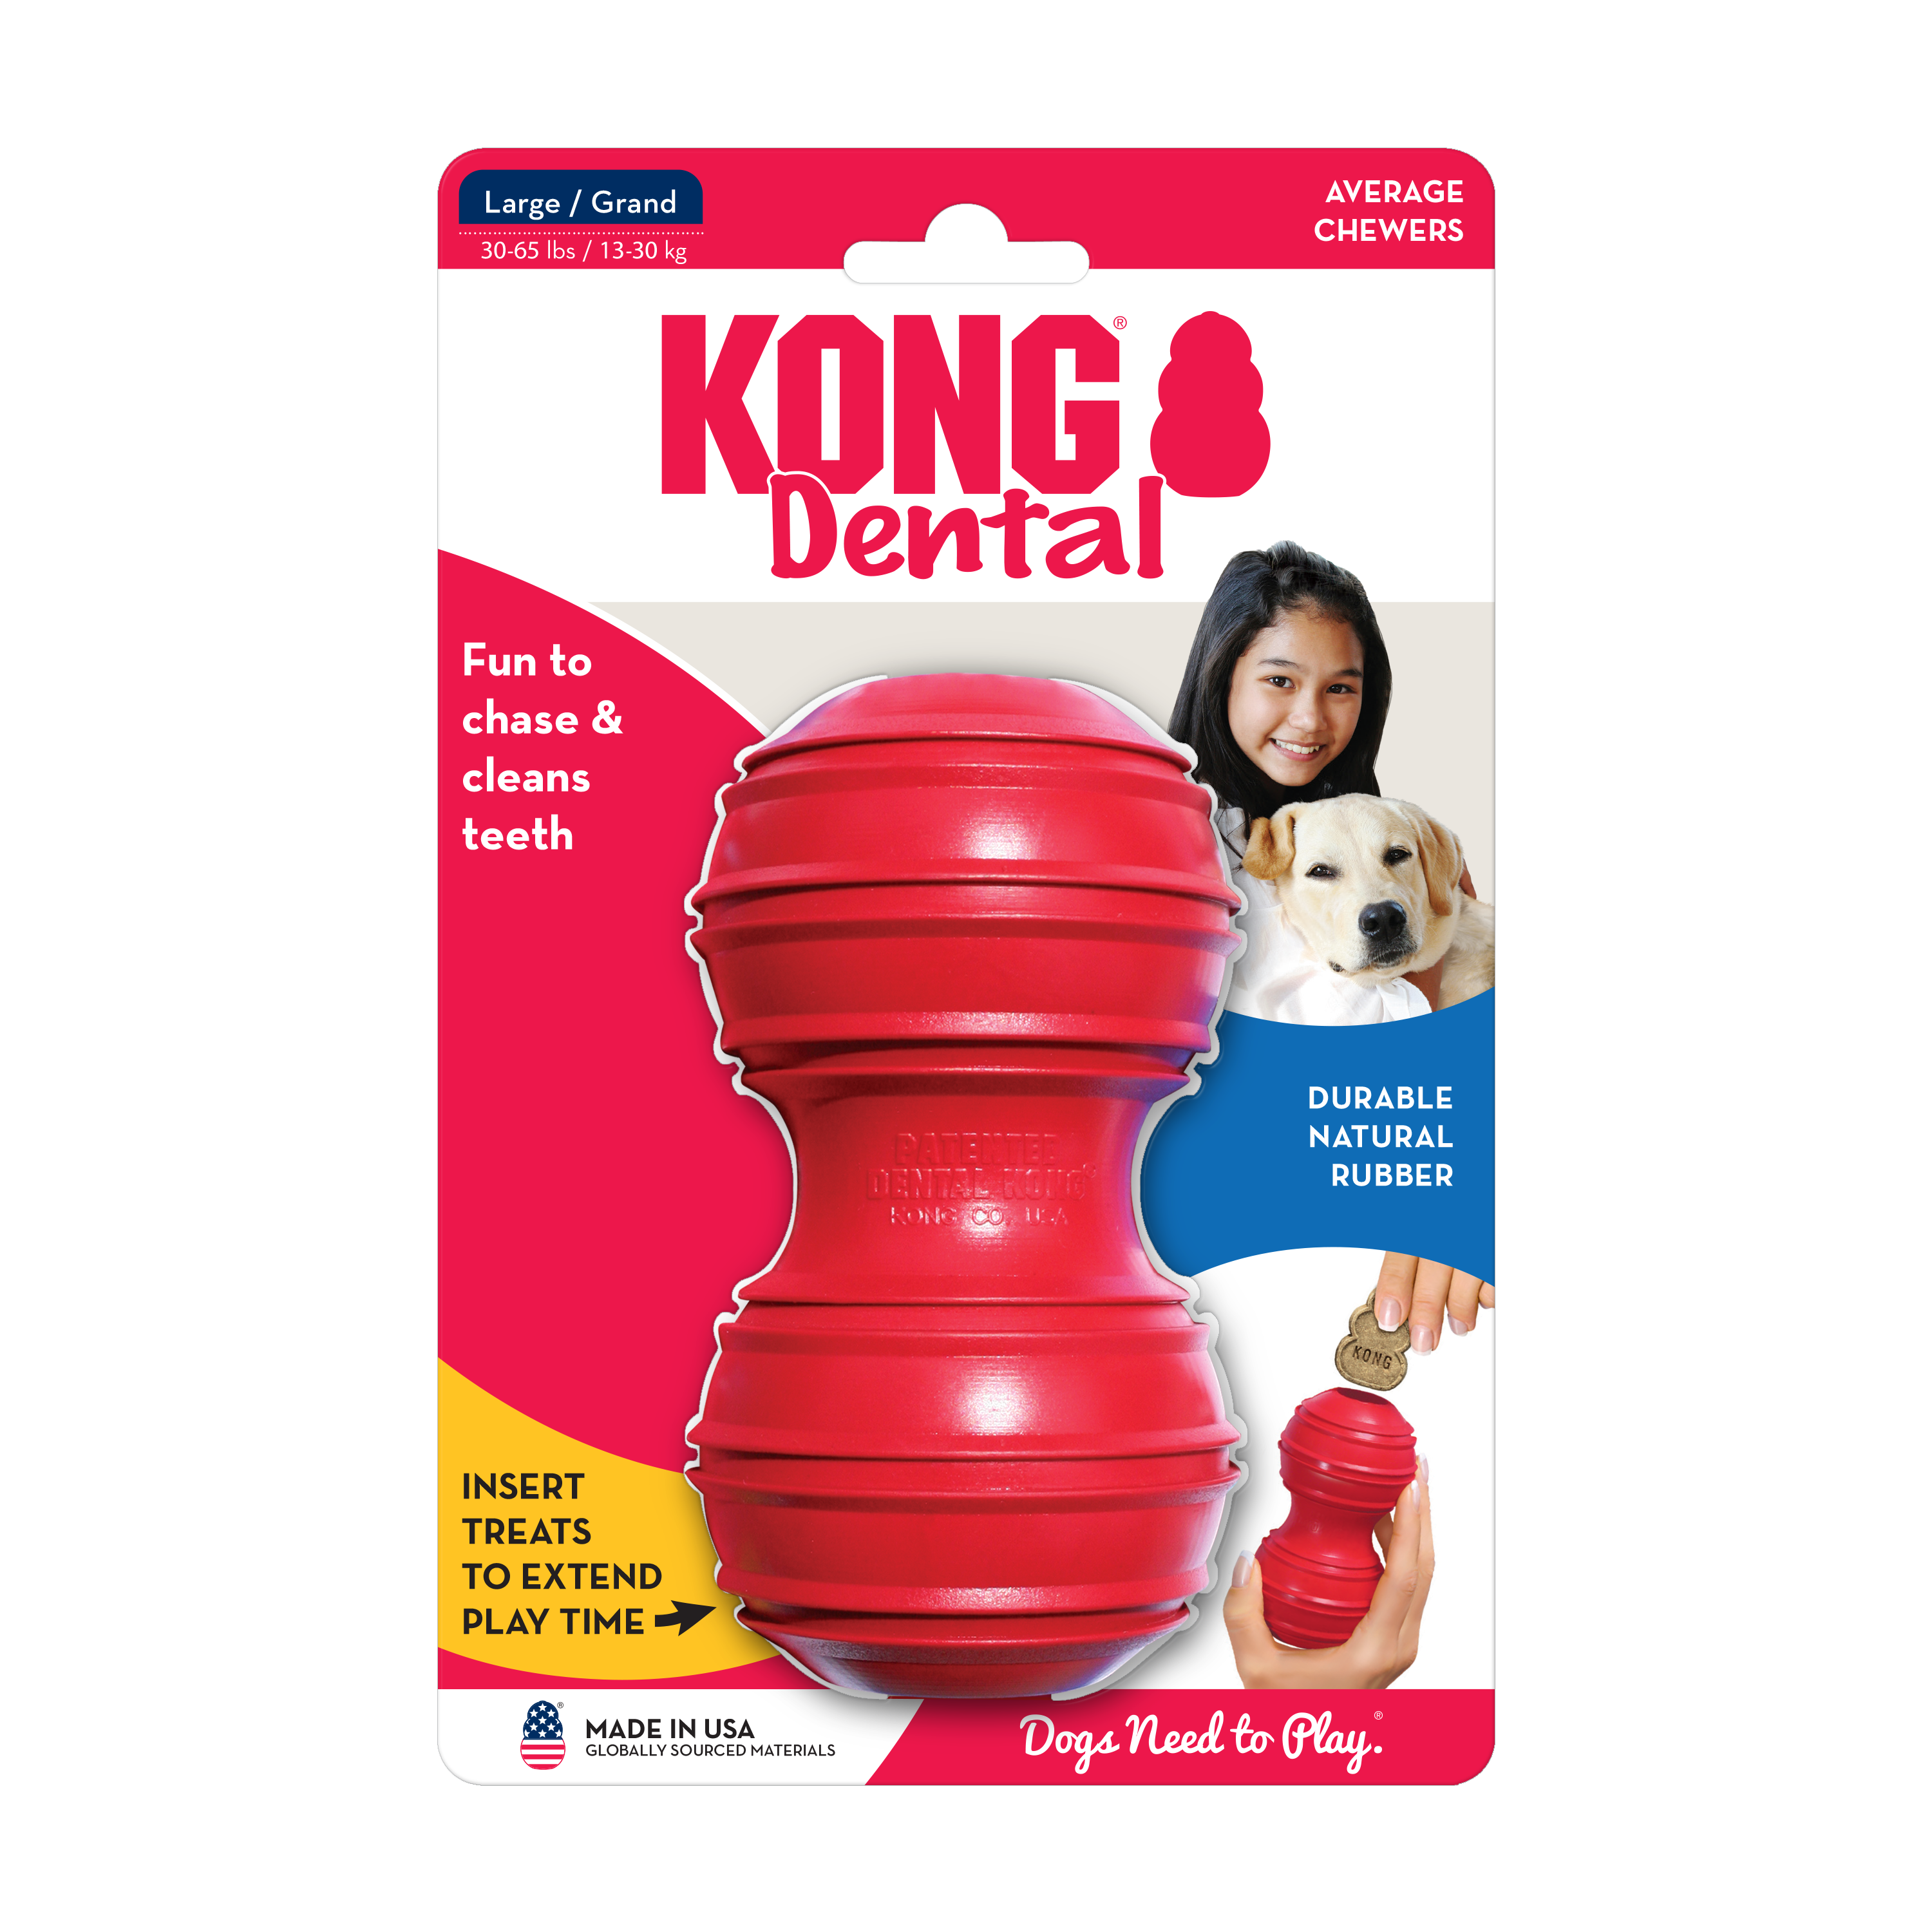 KONG Dental onpack product image